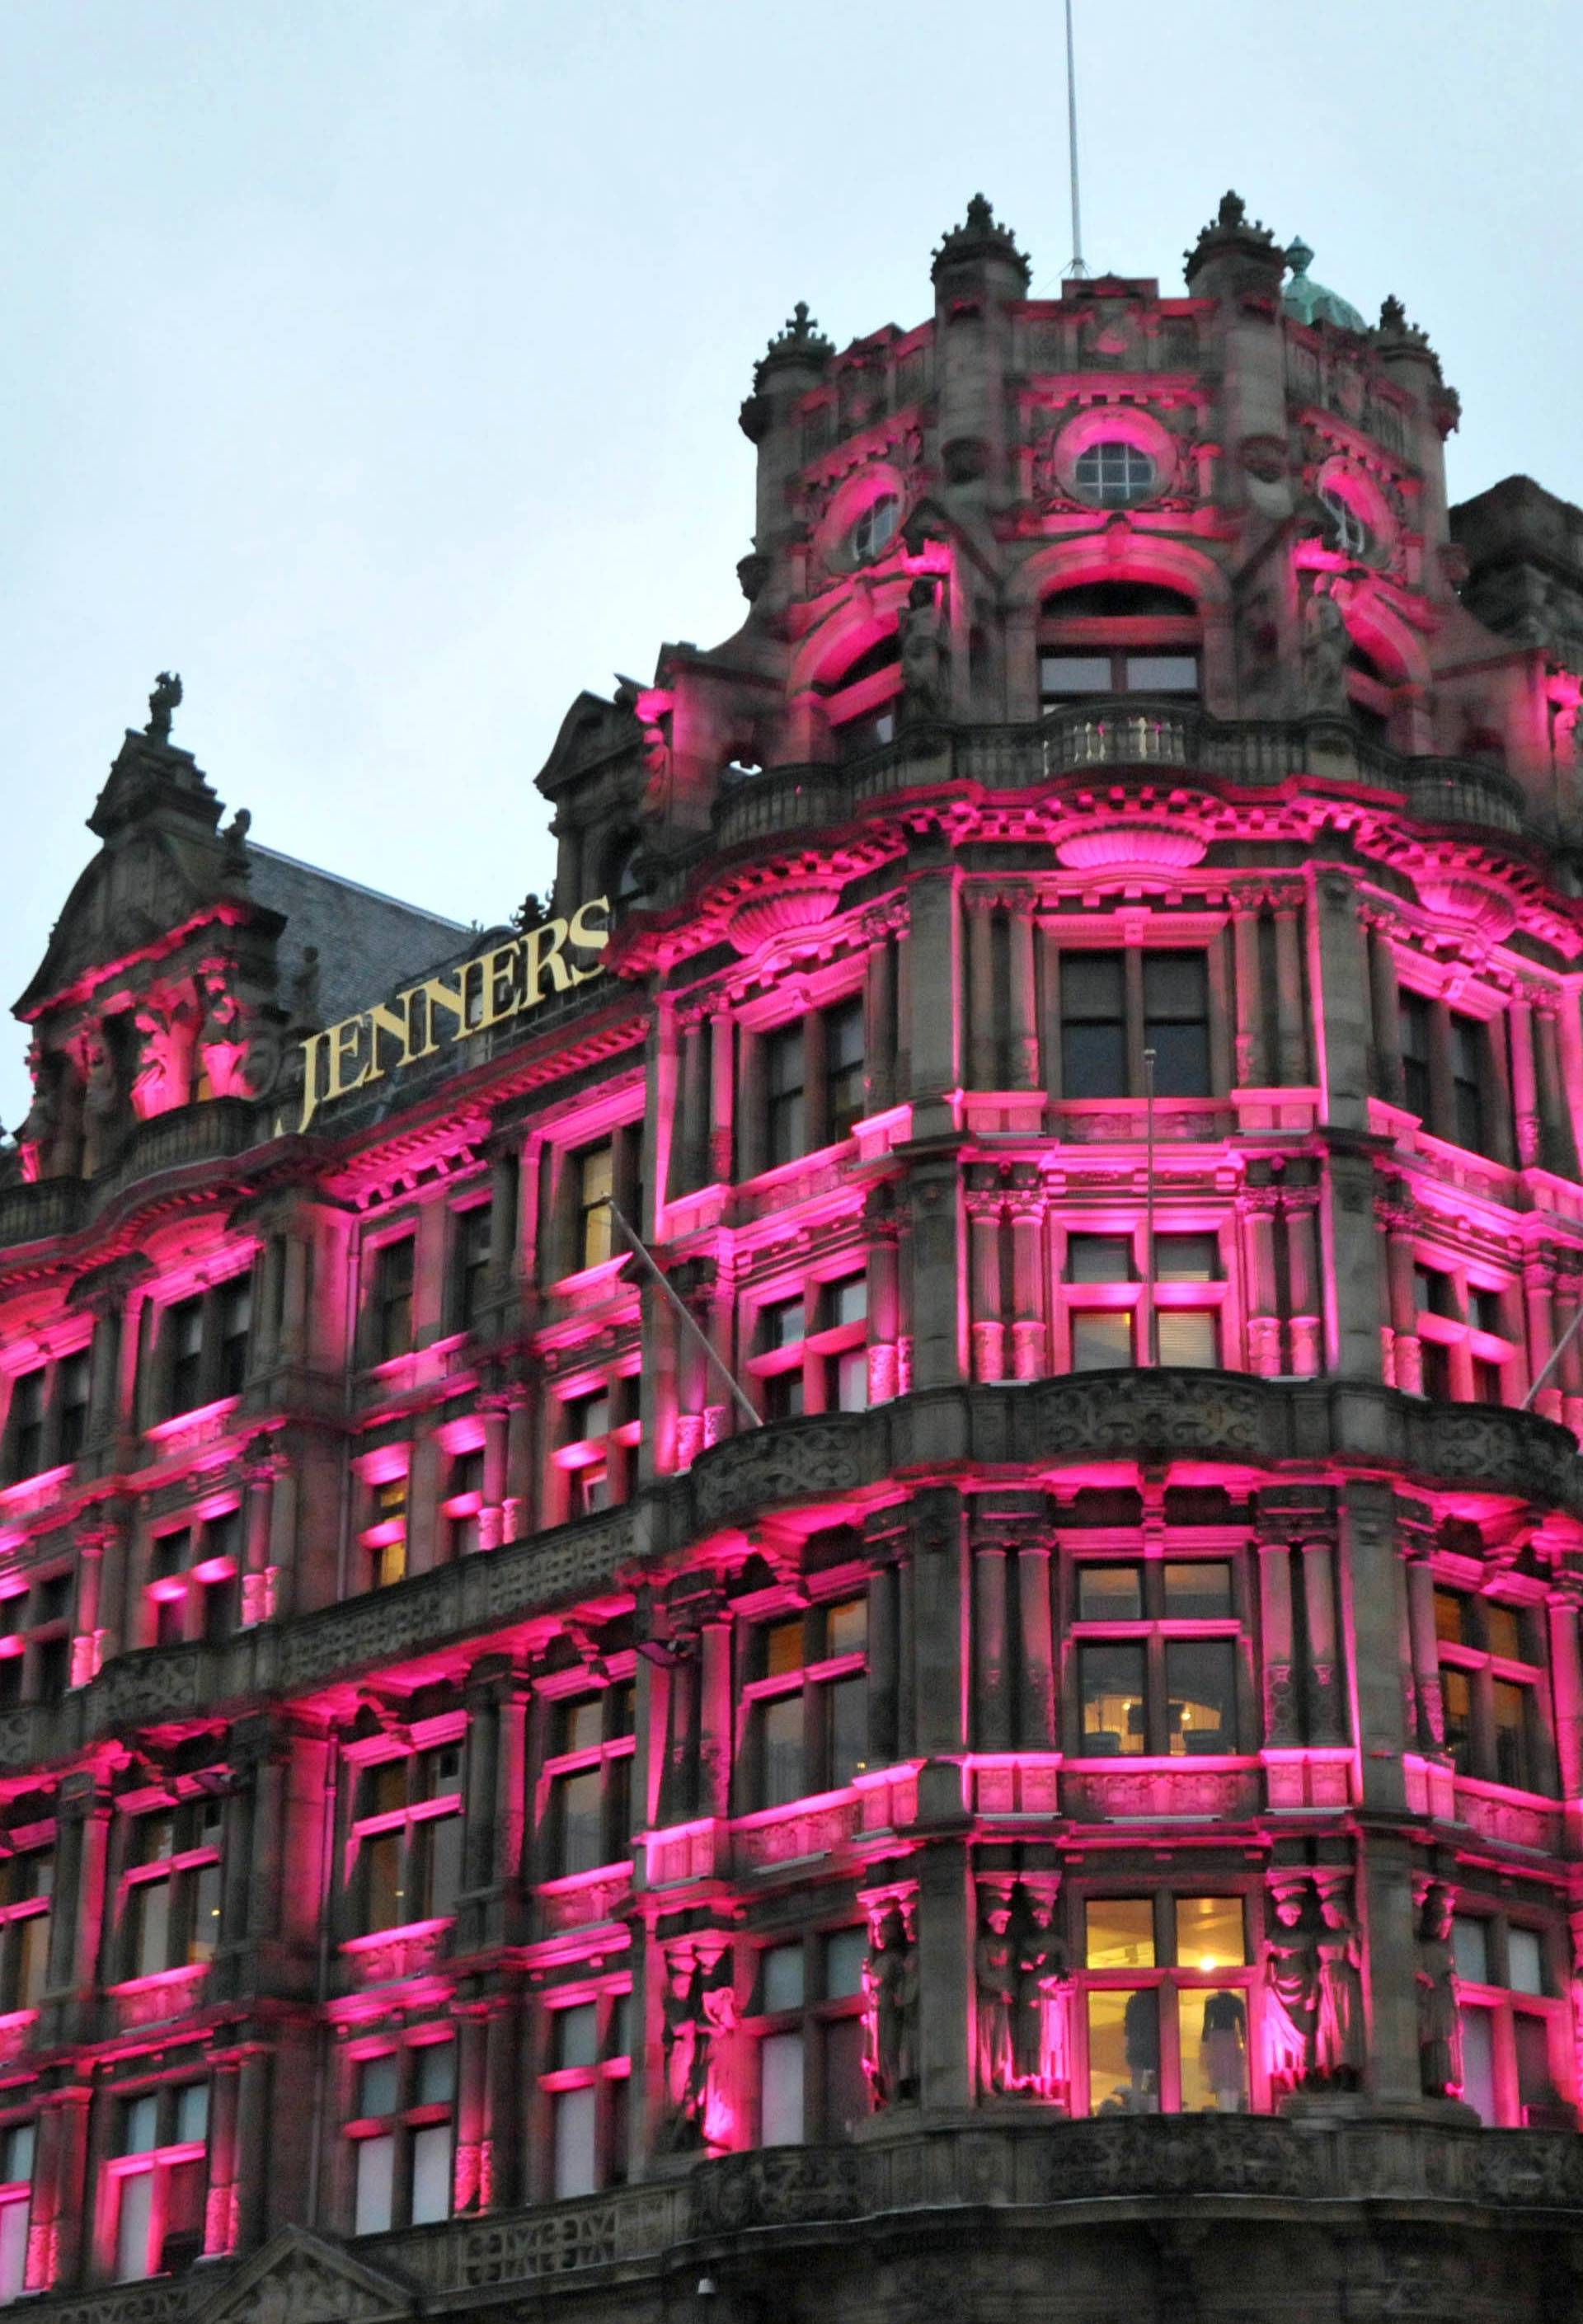 Liz Hurley and Shane Warne turn on the pink lights at Jenners in Edinburgh, UK